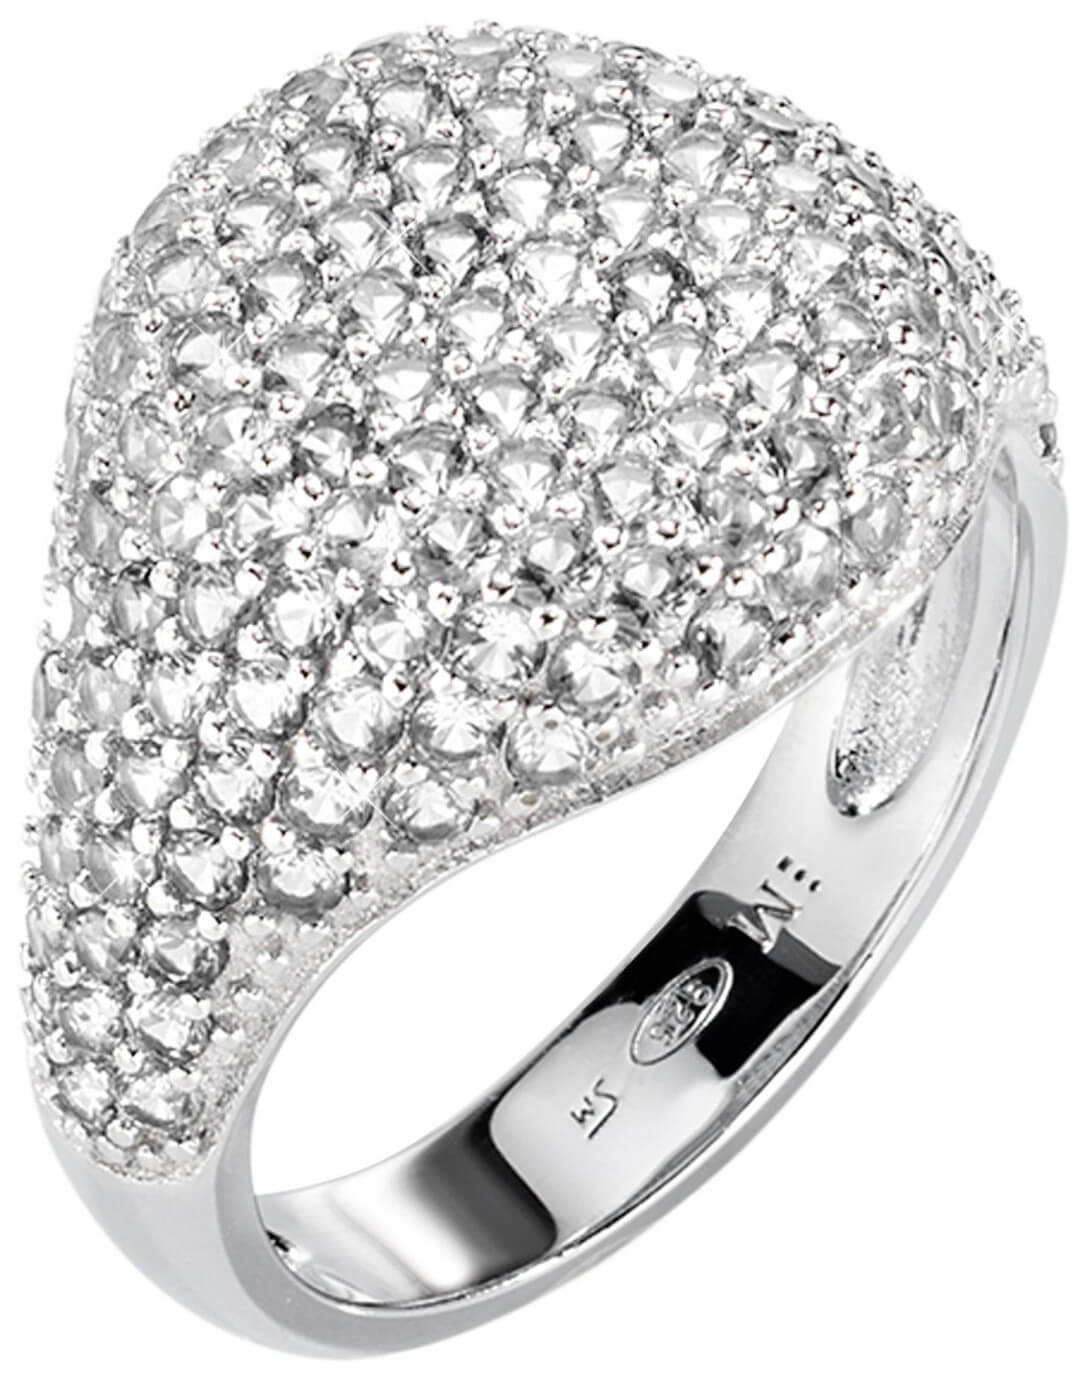 Morellato Luxusní třpytivý prsten ze stříbra Tesori SAIW65 56 mm